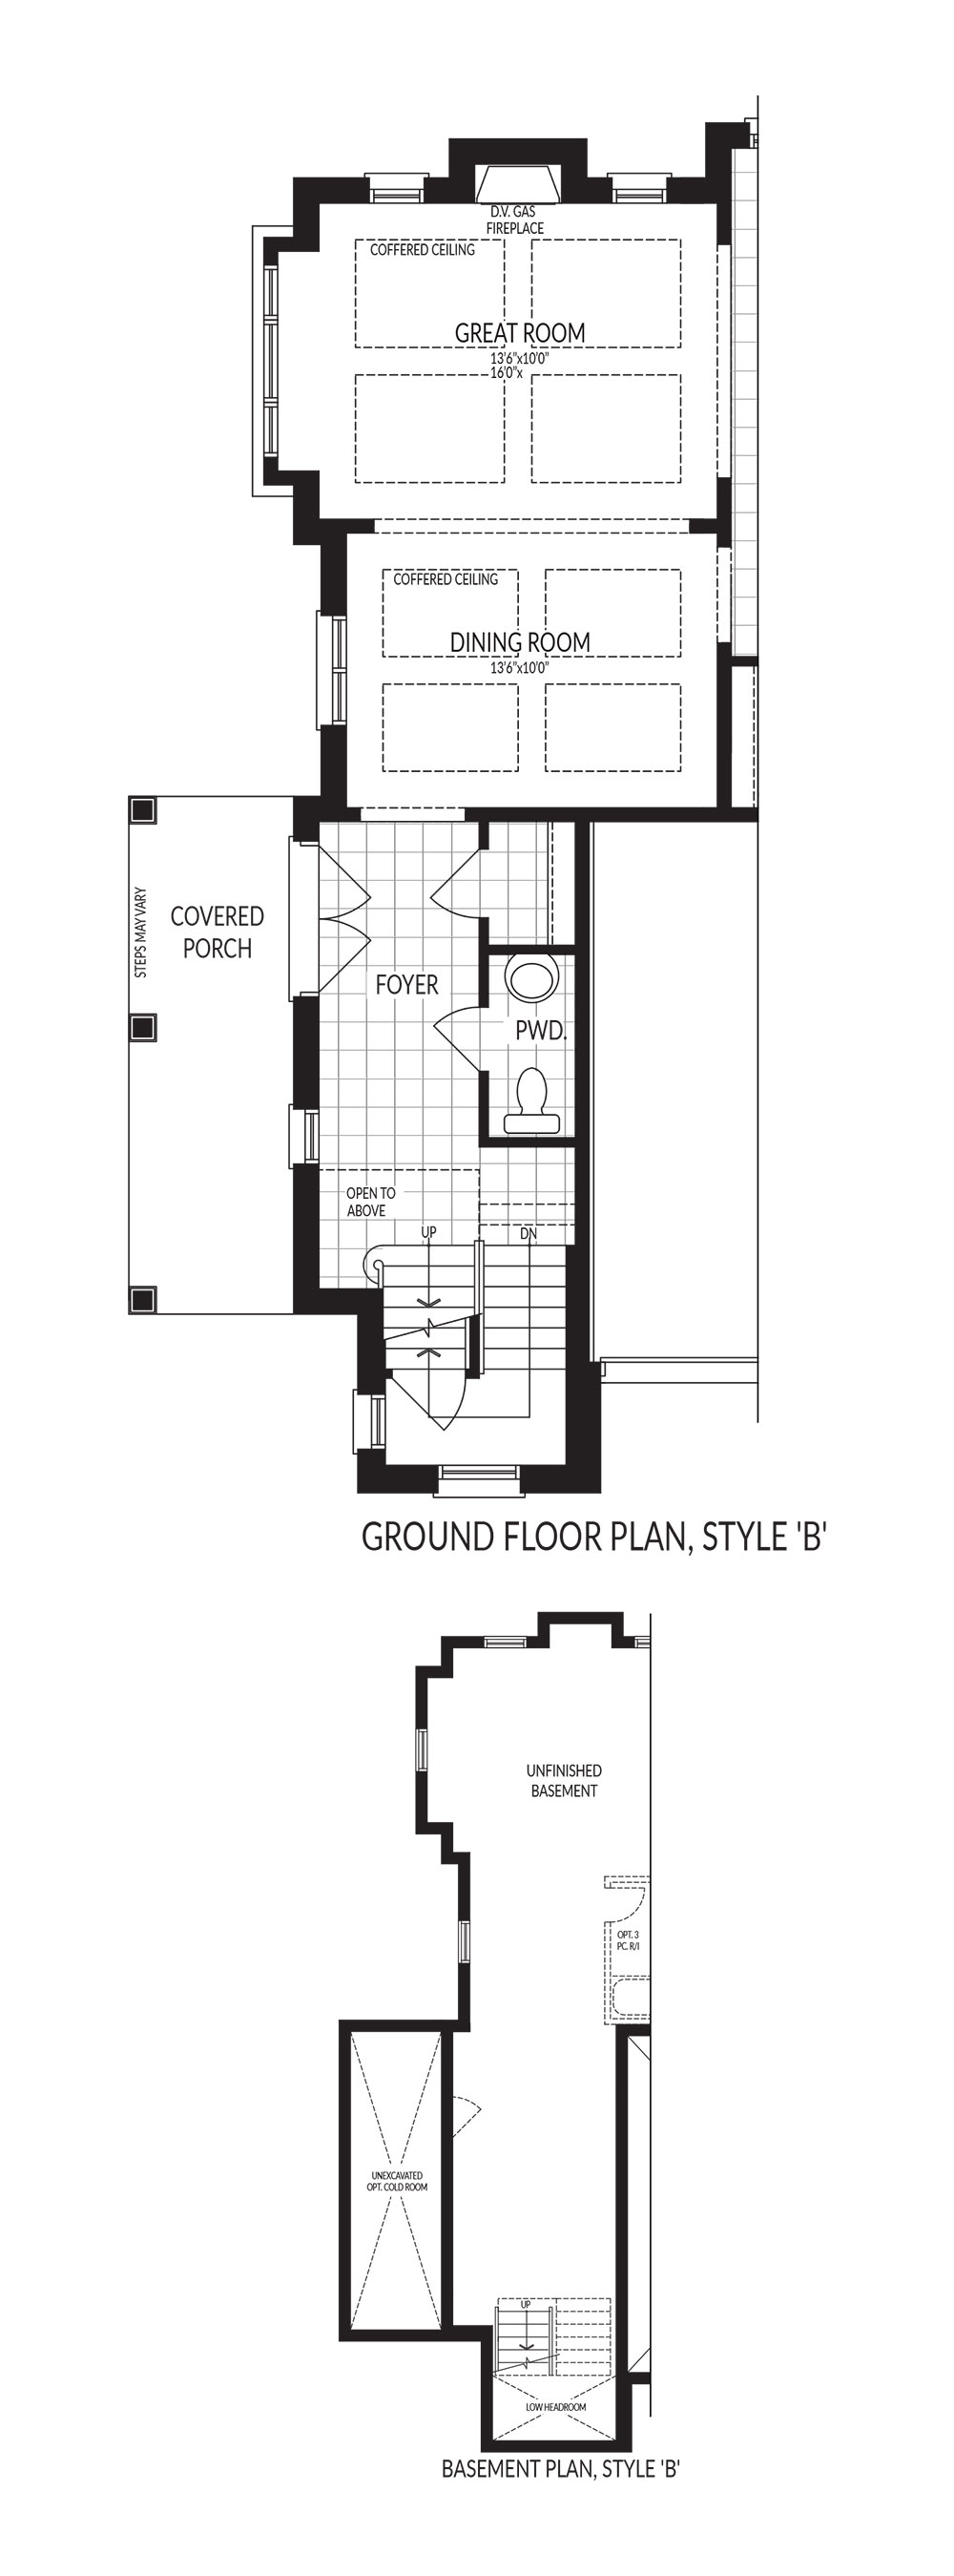 Ground Floor Plan Style B + Basement Floor Plan Style B